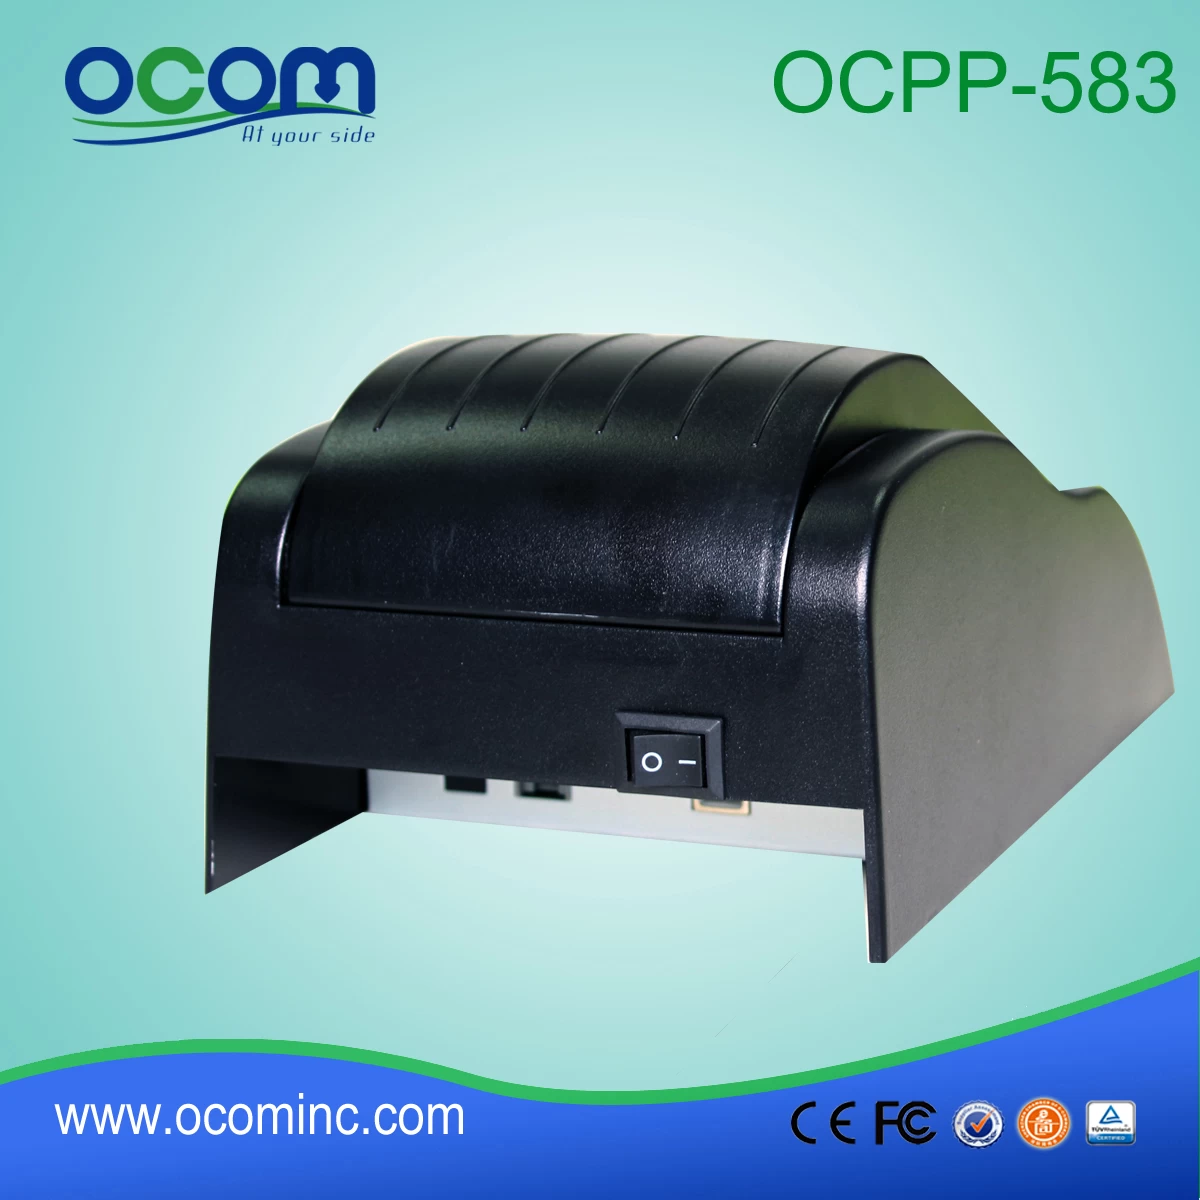 OCPP-583: 2015 direct thermal printer price, thermal pos printer